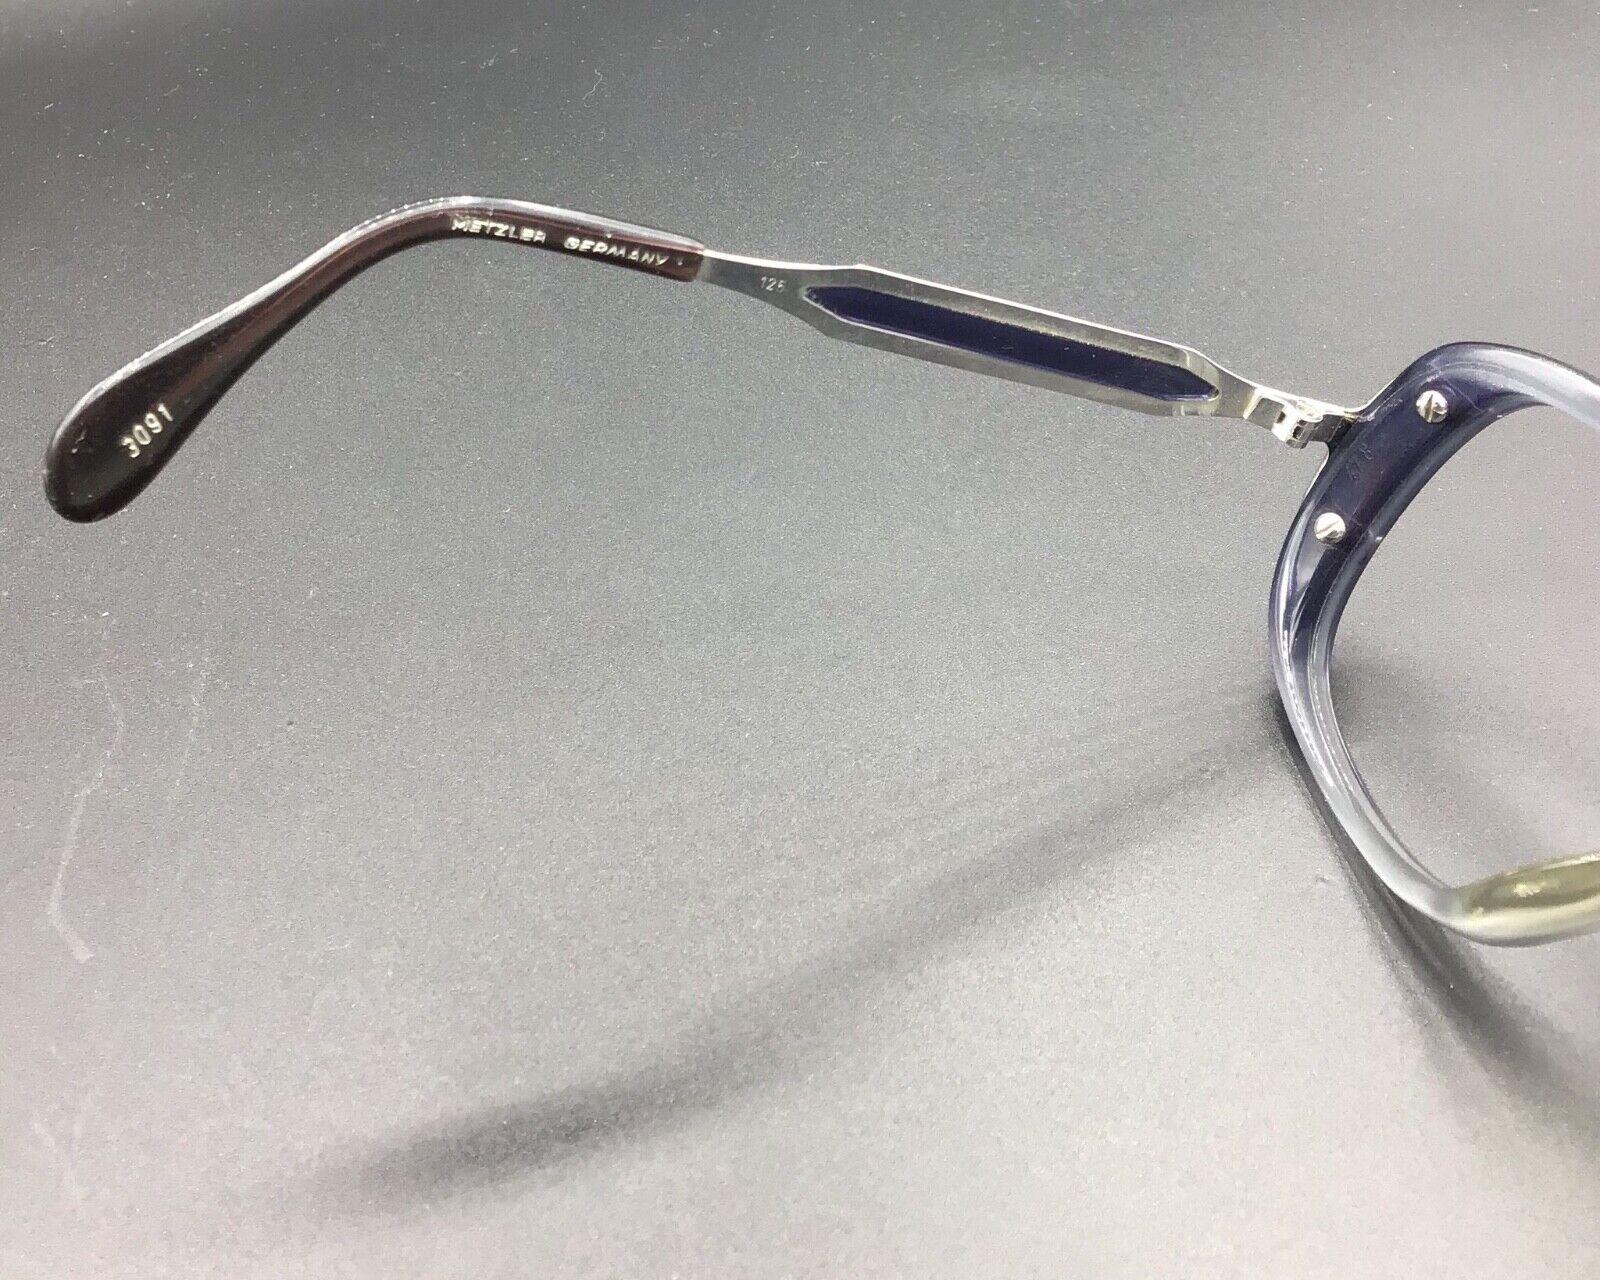 Metzler occhiale vintage Eyewear 3091 model frame brillen lunettes Germany